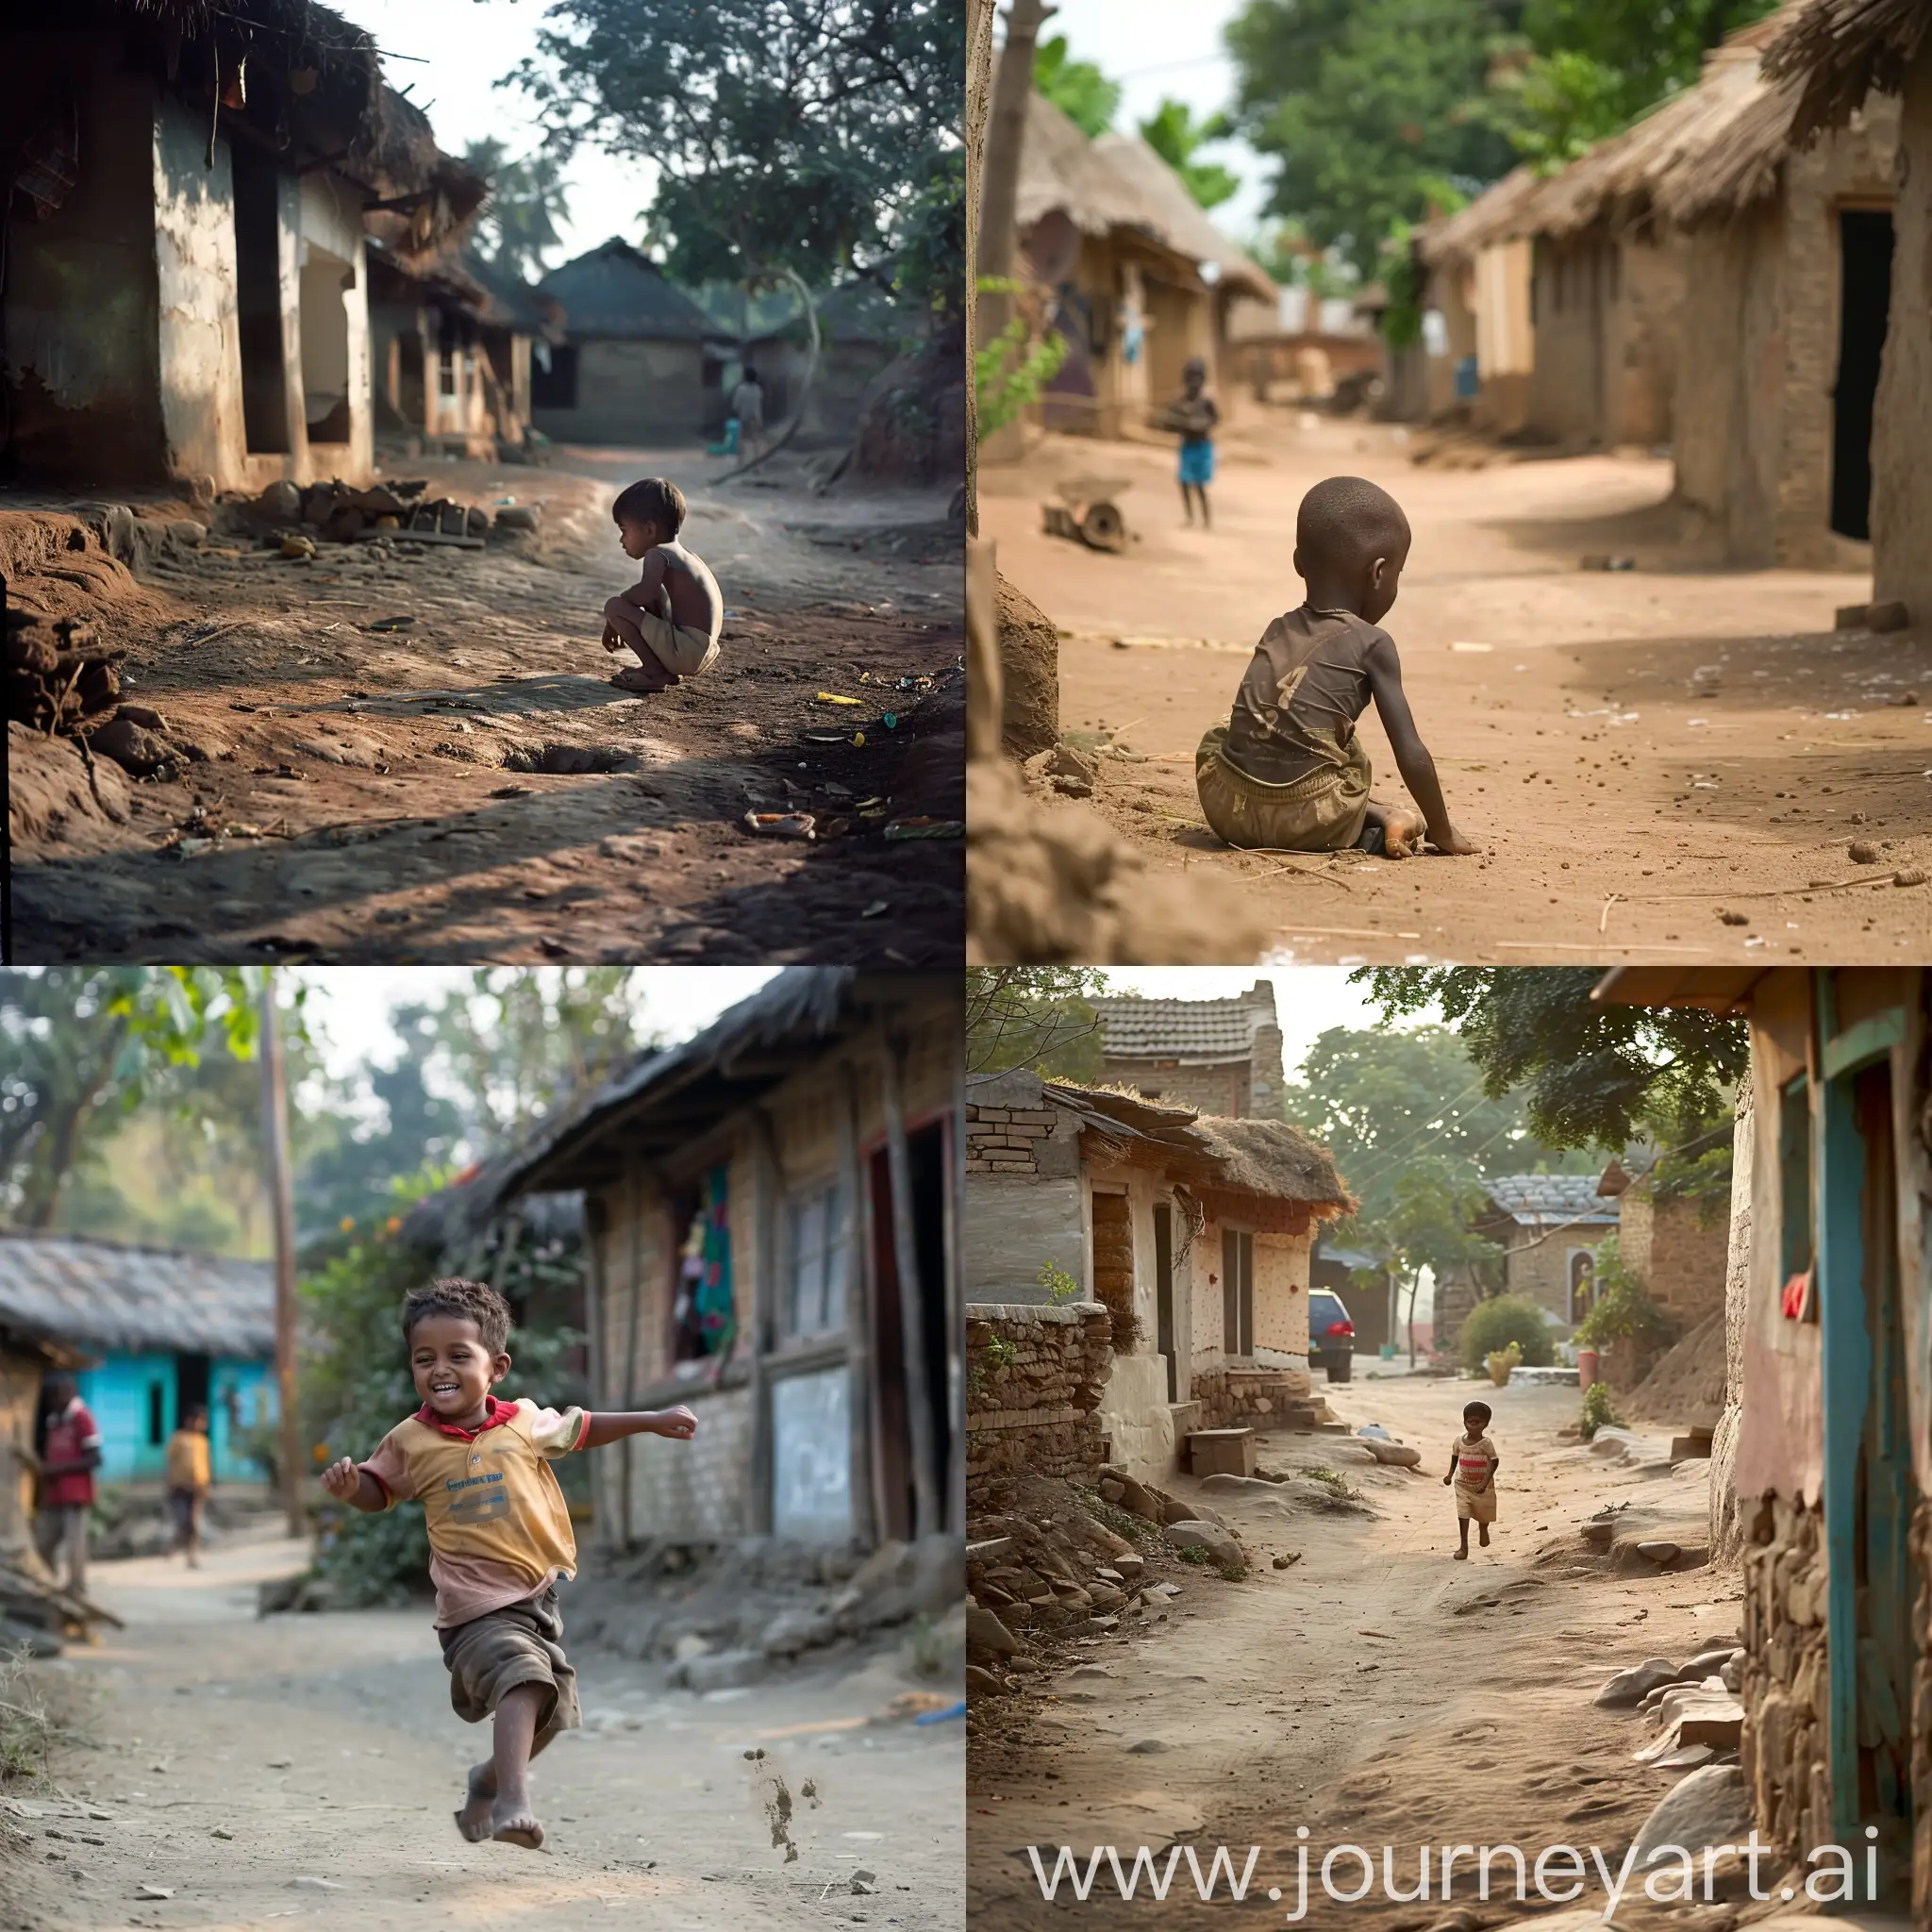 Boy-Playing-in-Charming-Village-Scene